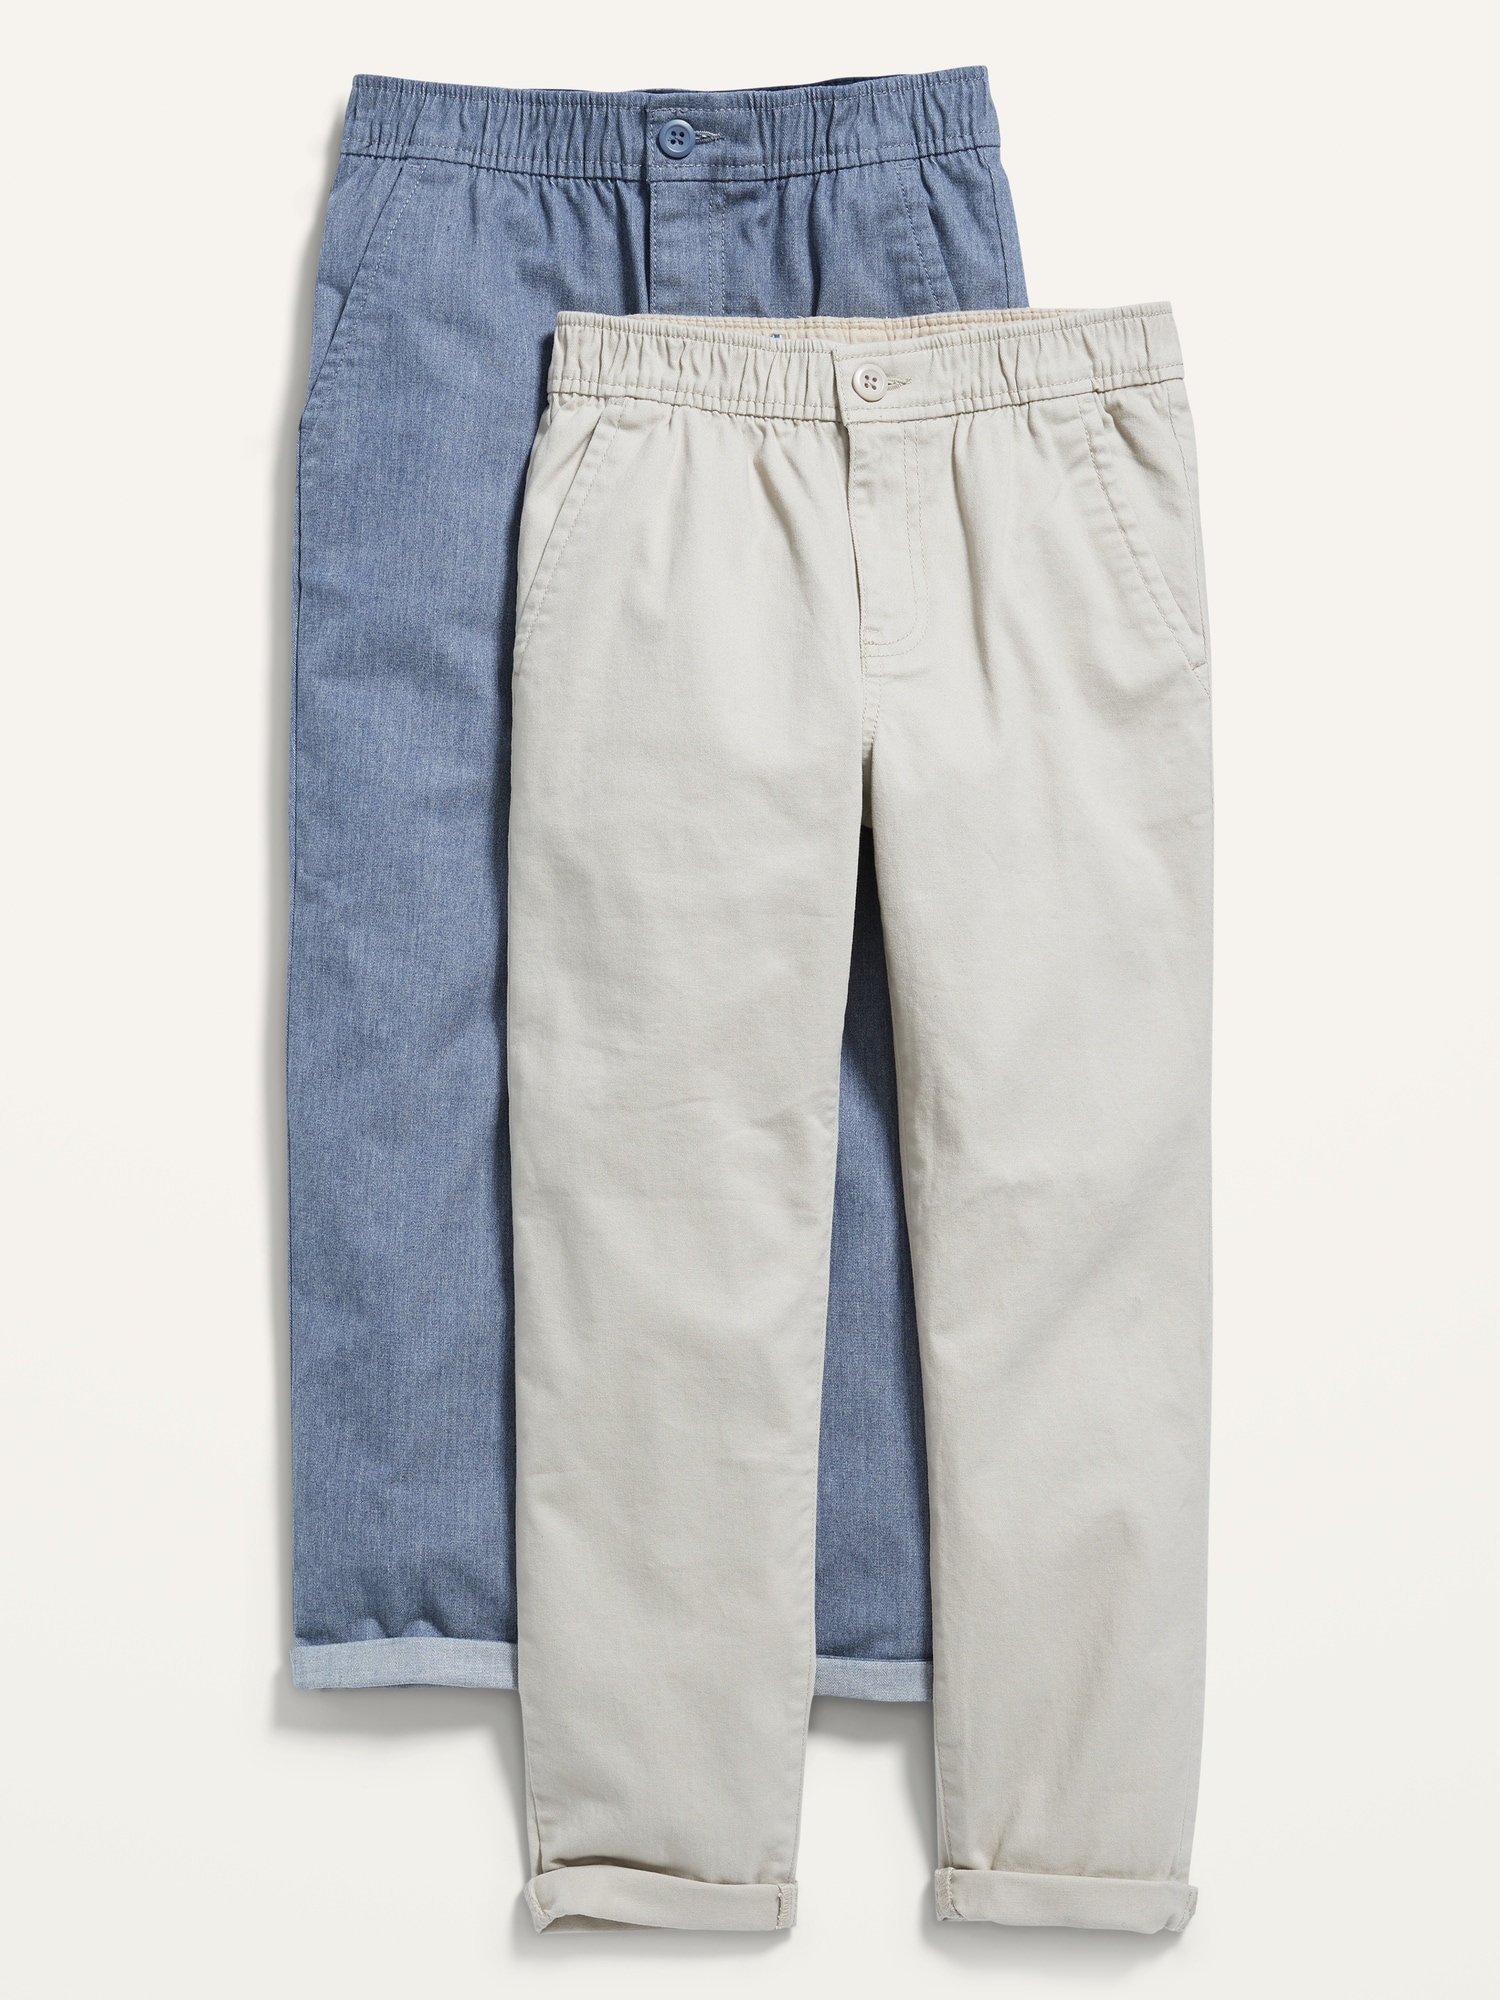 OGC Chino Built-In Flex Taper Pants 2-Pack for Boys Hot Deal